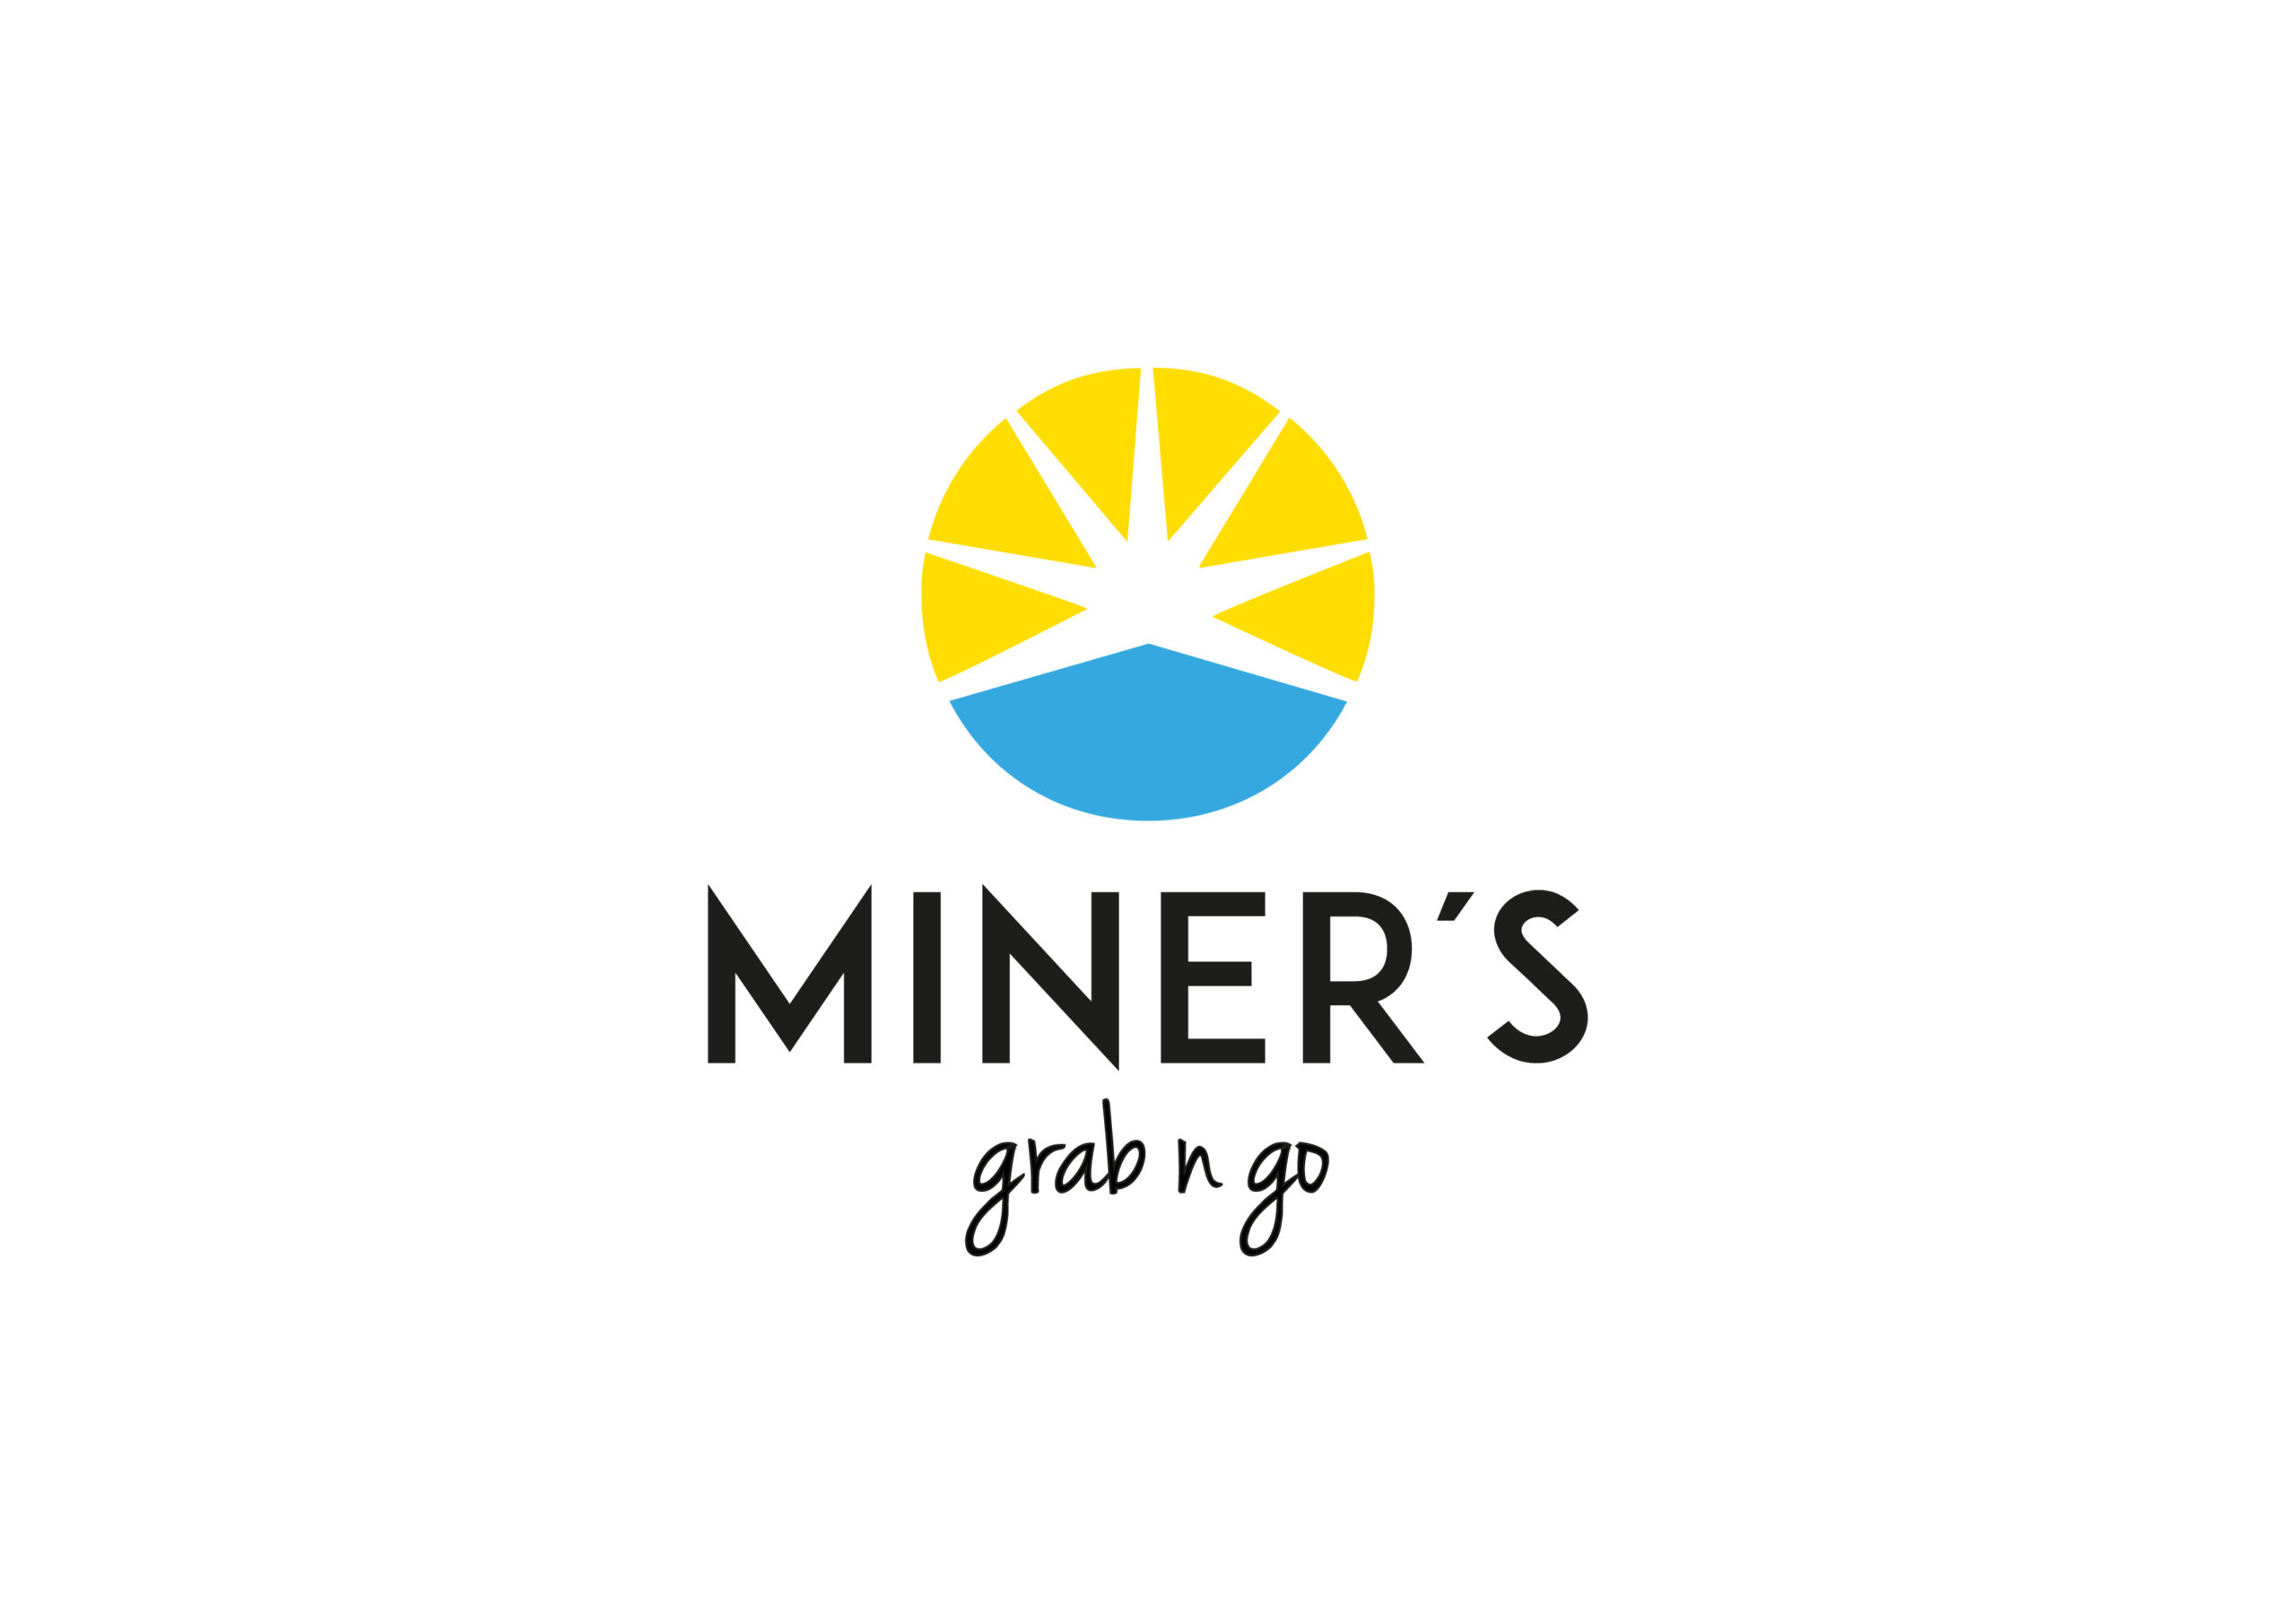 MINER'S